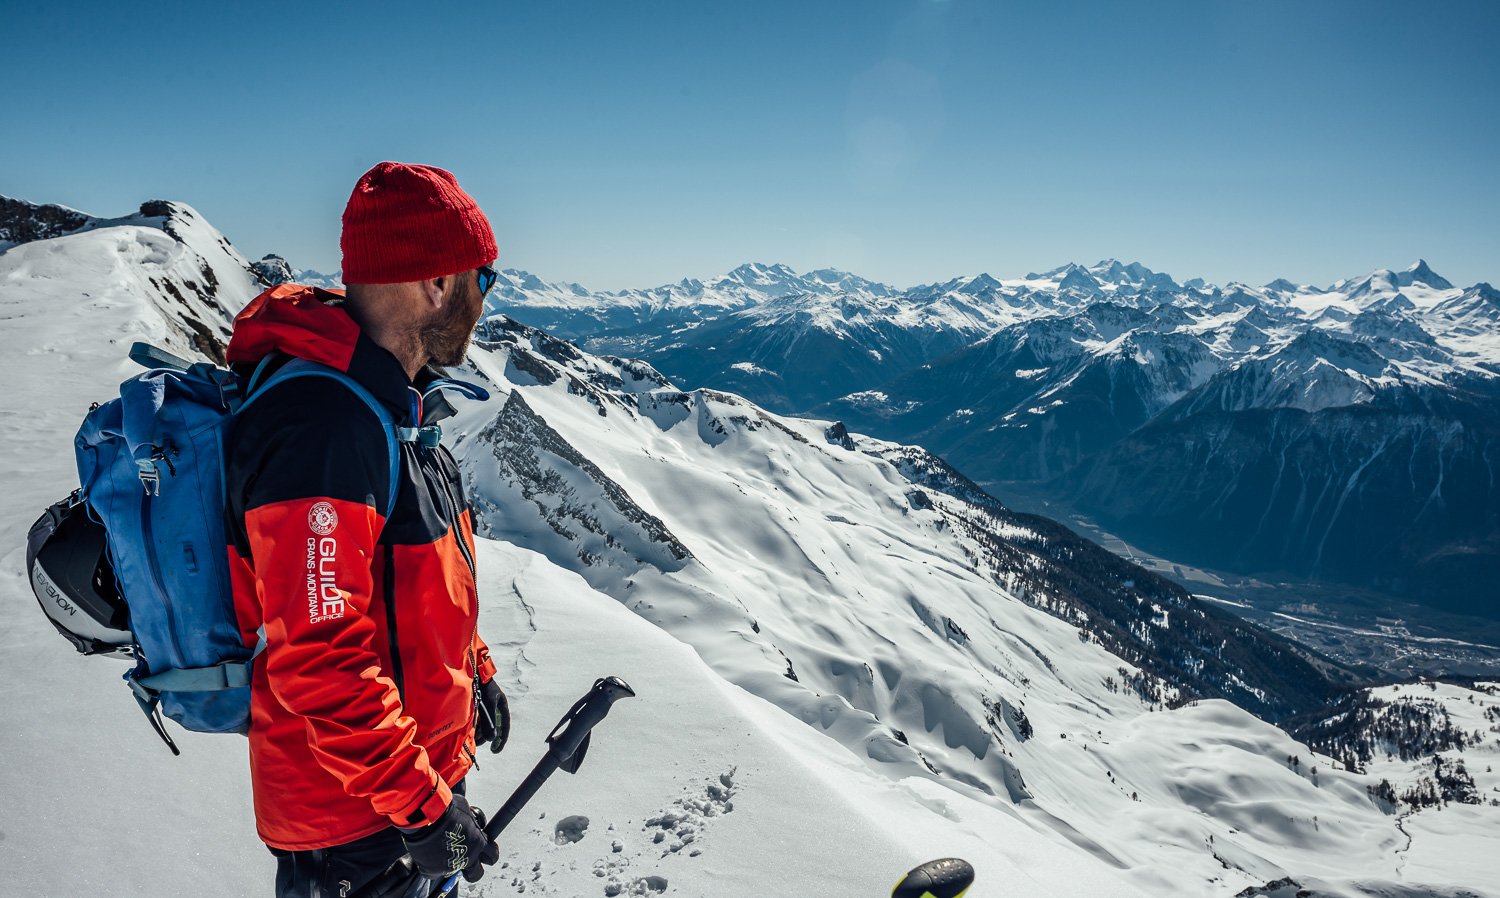 Frederik van den Berg for Bergwelten skiing